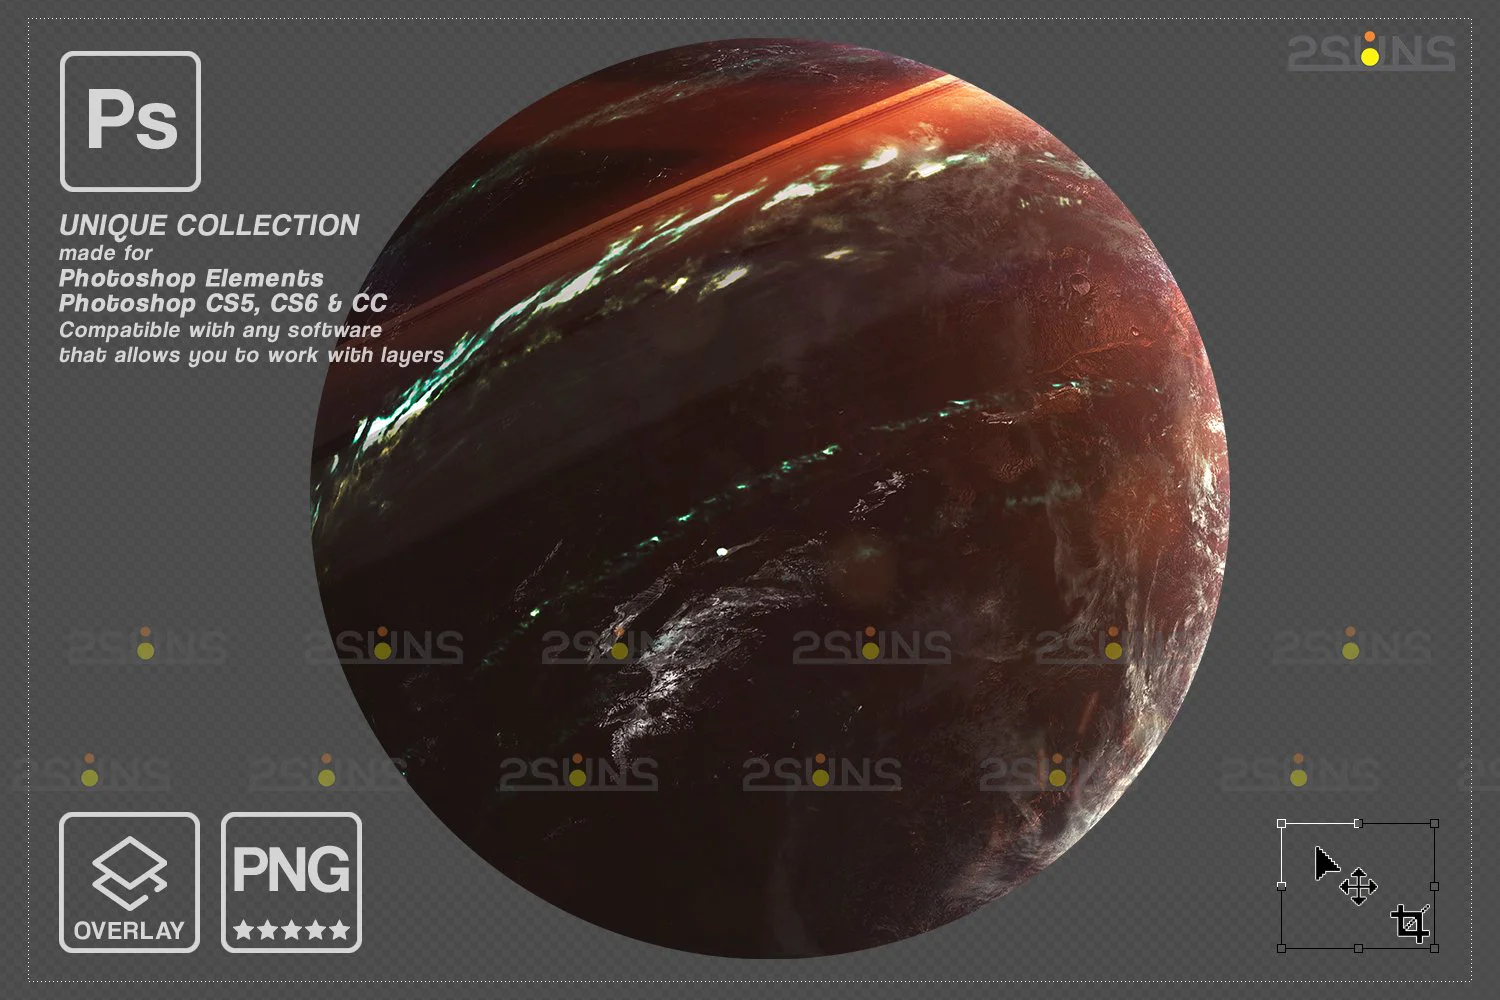 2325 11款行星宇宙太空PHOTOSHOP覆盖PNG空间剪贴画夜空Space planets v2 photo overlays